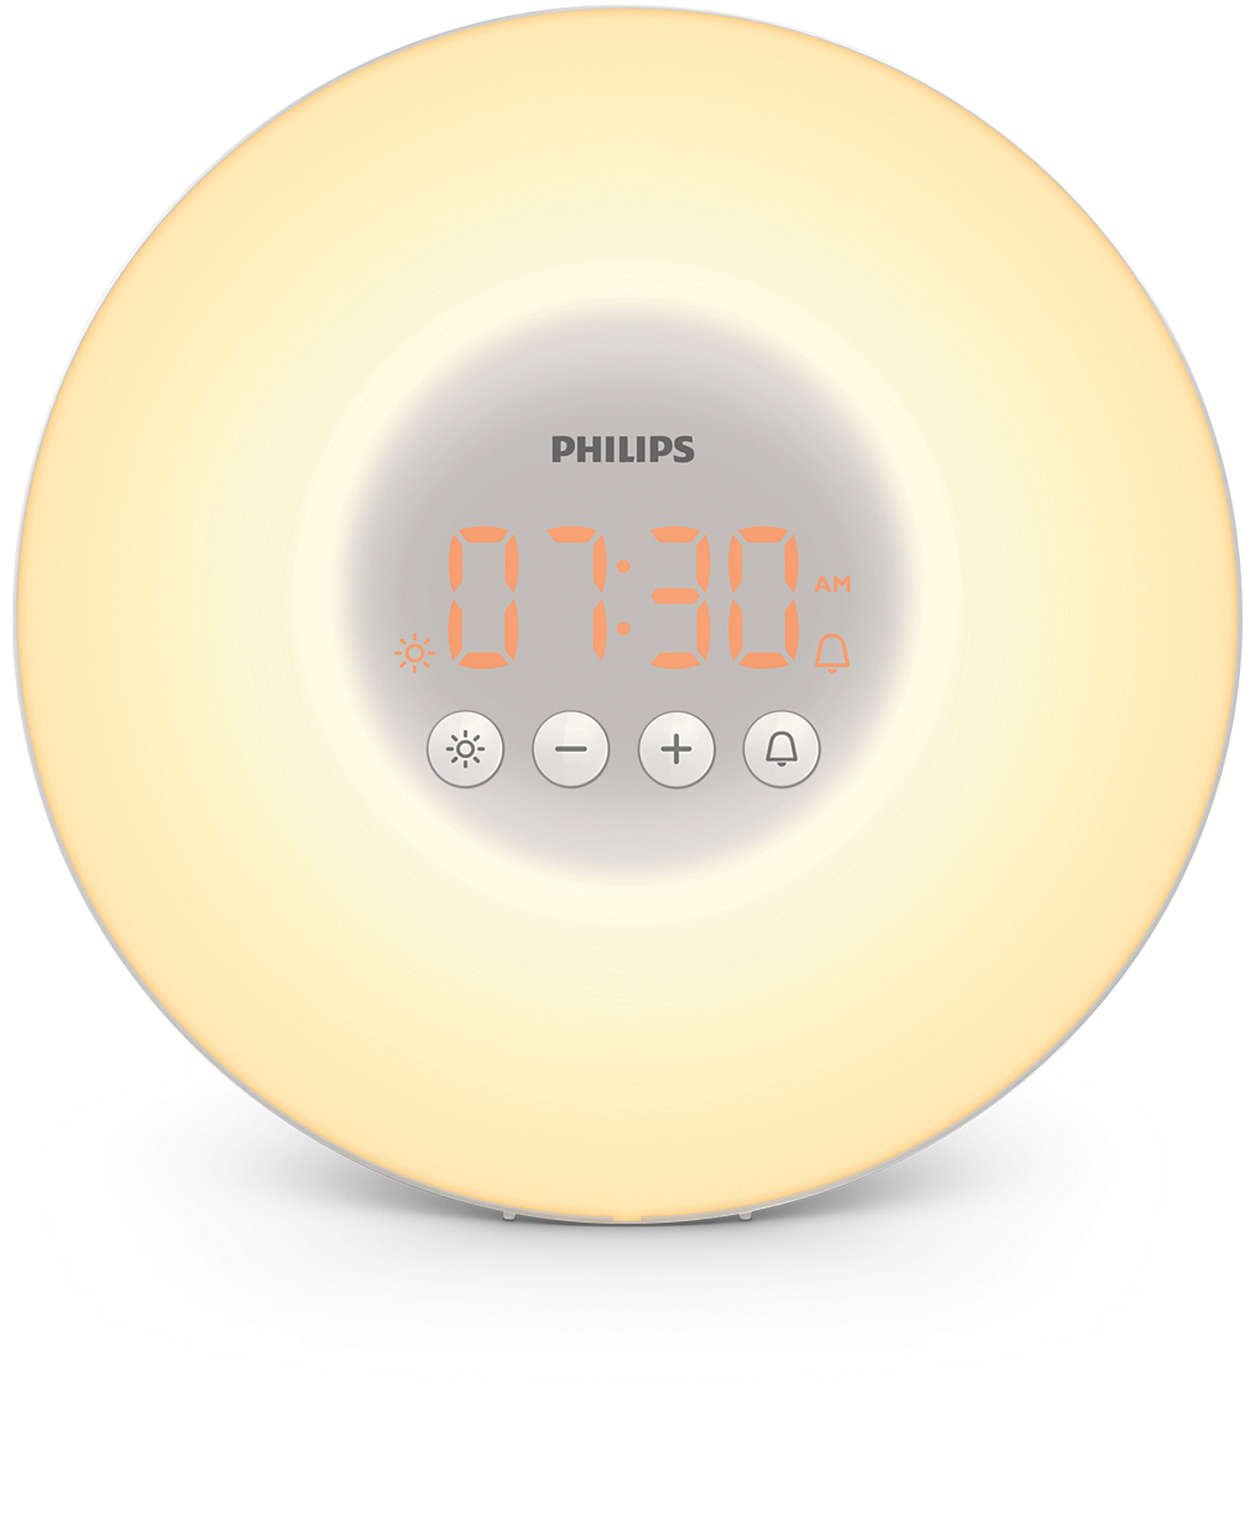 Koop Philips - Light alarm HF3500/01